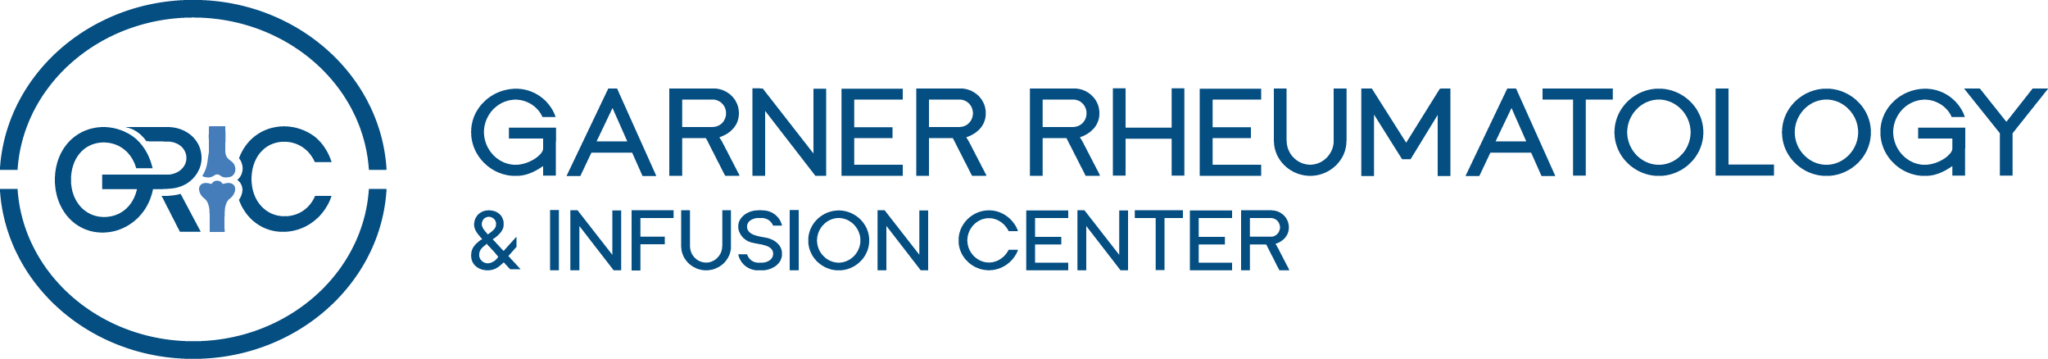 Site logo - Garner Rheumatology and Infusion Center